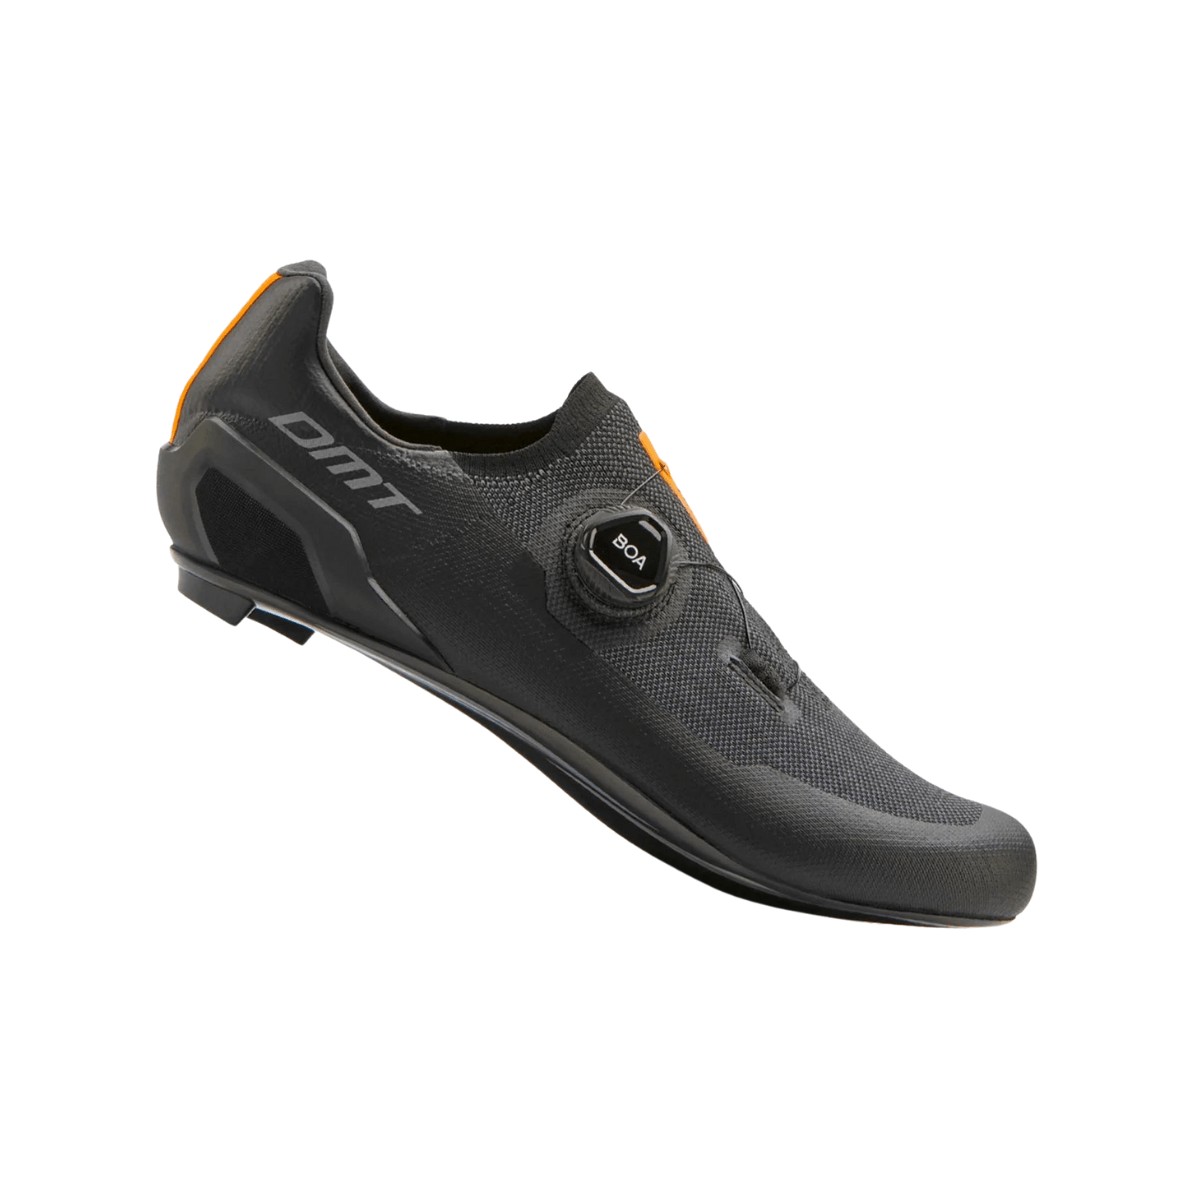 Chaussures DMT KR30 Noir AW22, Taille 43 - EUR